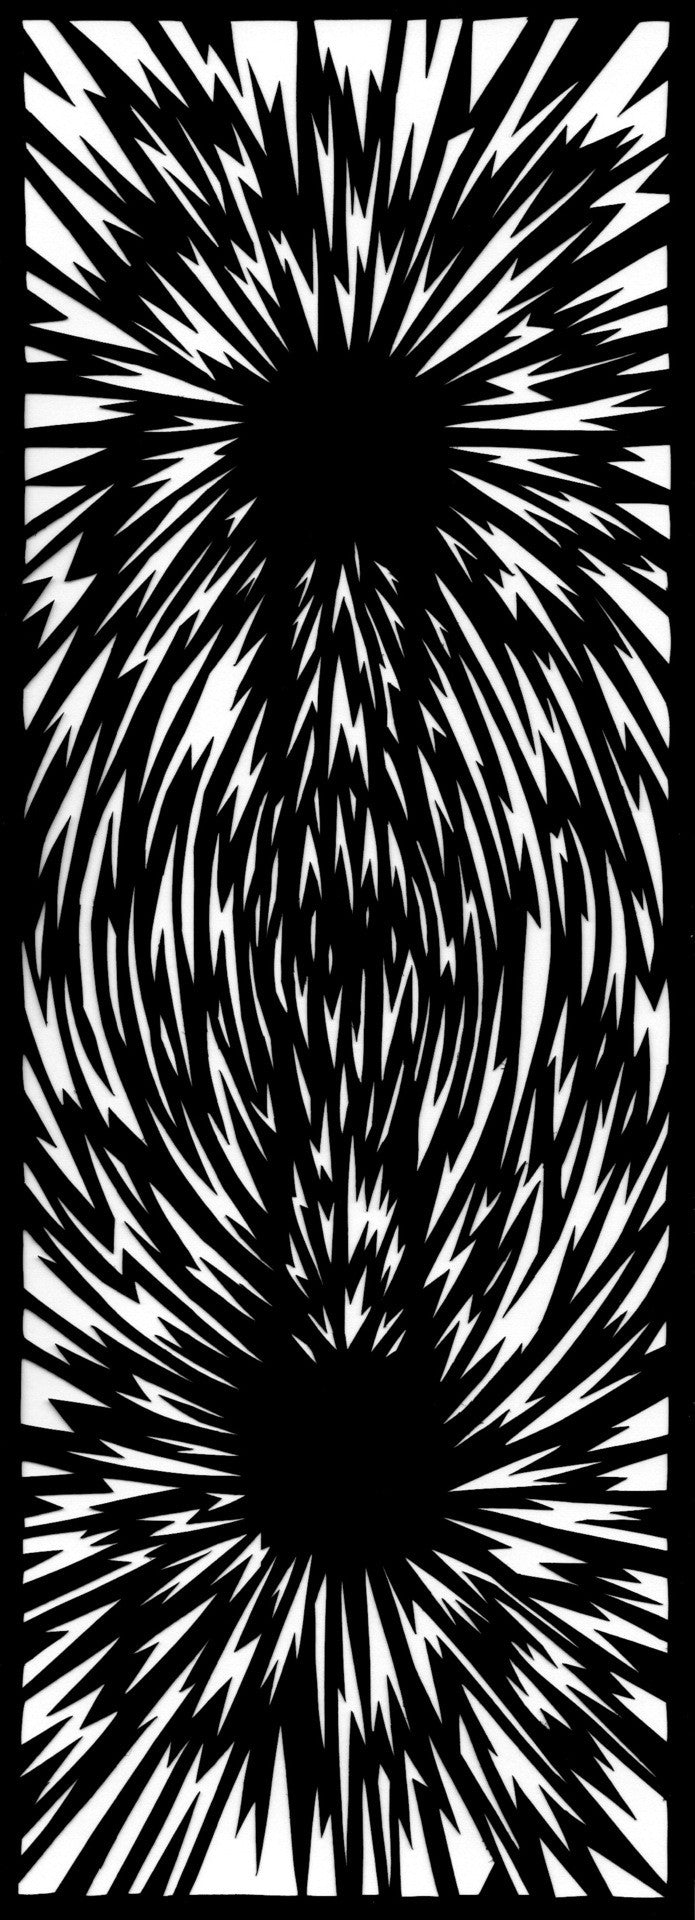 Magnetic Field (unframed print)